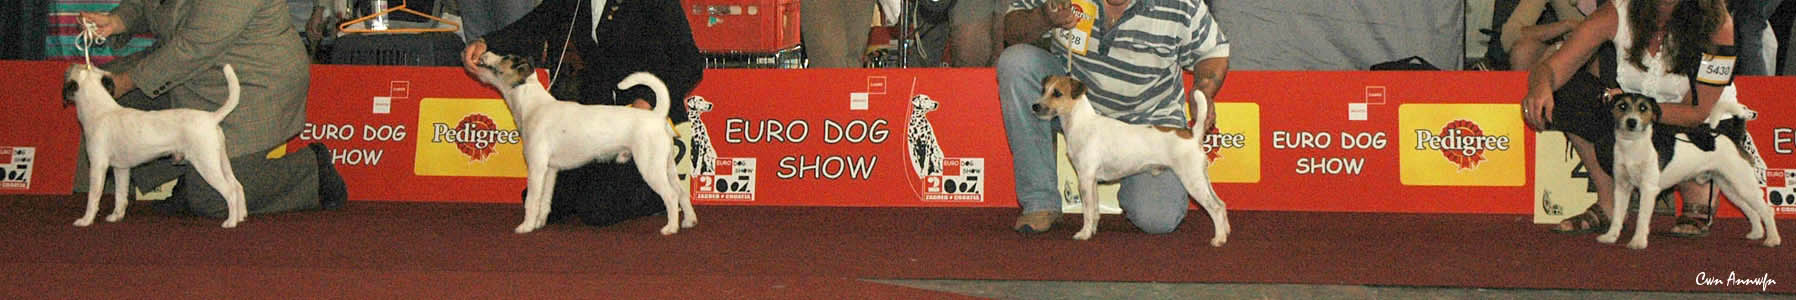 line up youth dogs - fairfax of lovealoch - eks terra furiis target runner - ultra archie - nervous breakdown hard rock dog